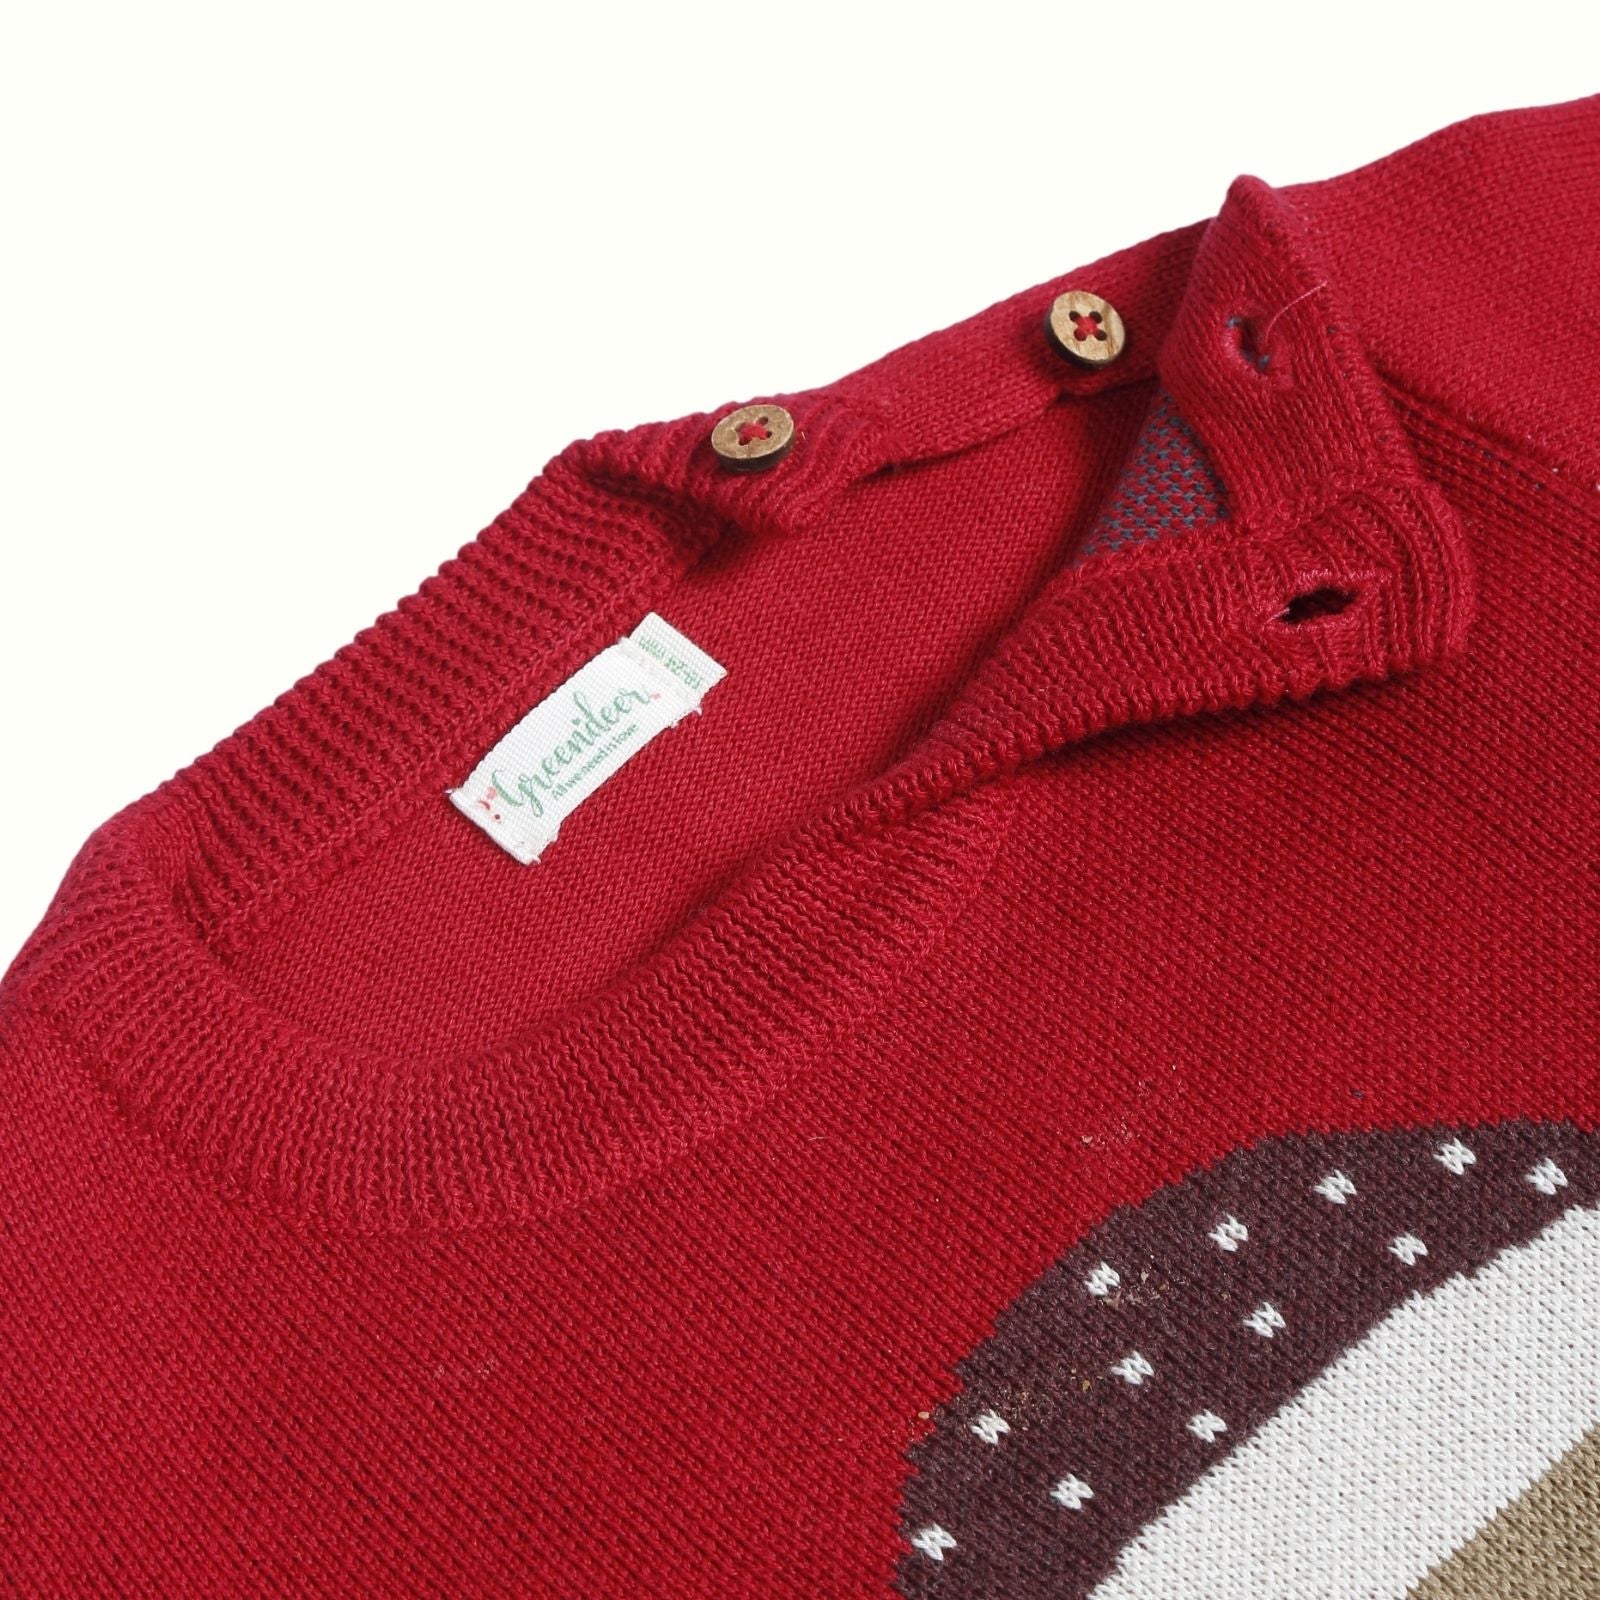 Greendeer Santa Jacquard 100% Cotton Sweater with Lower Set of 4